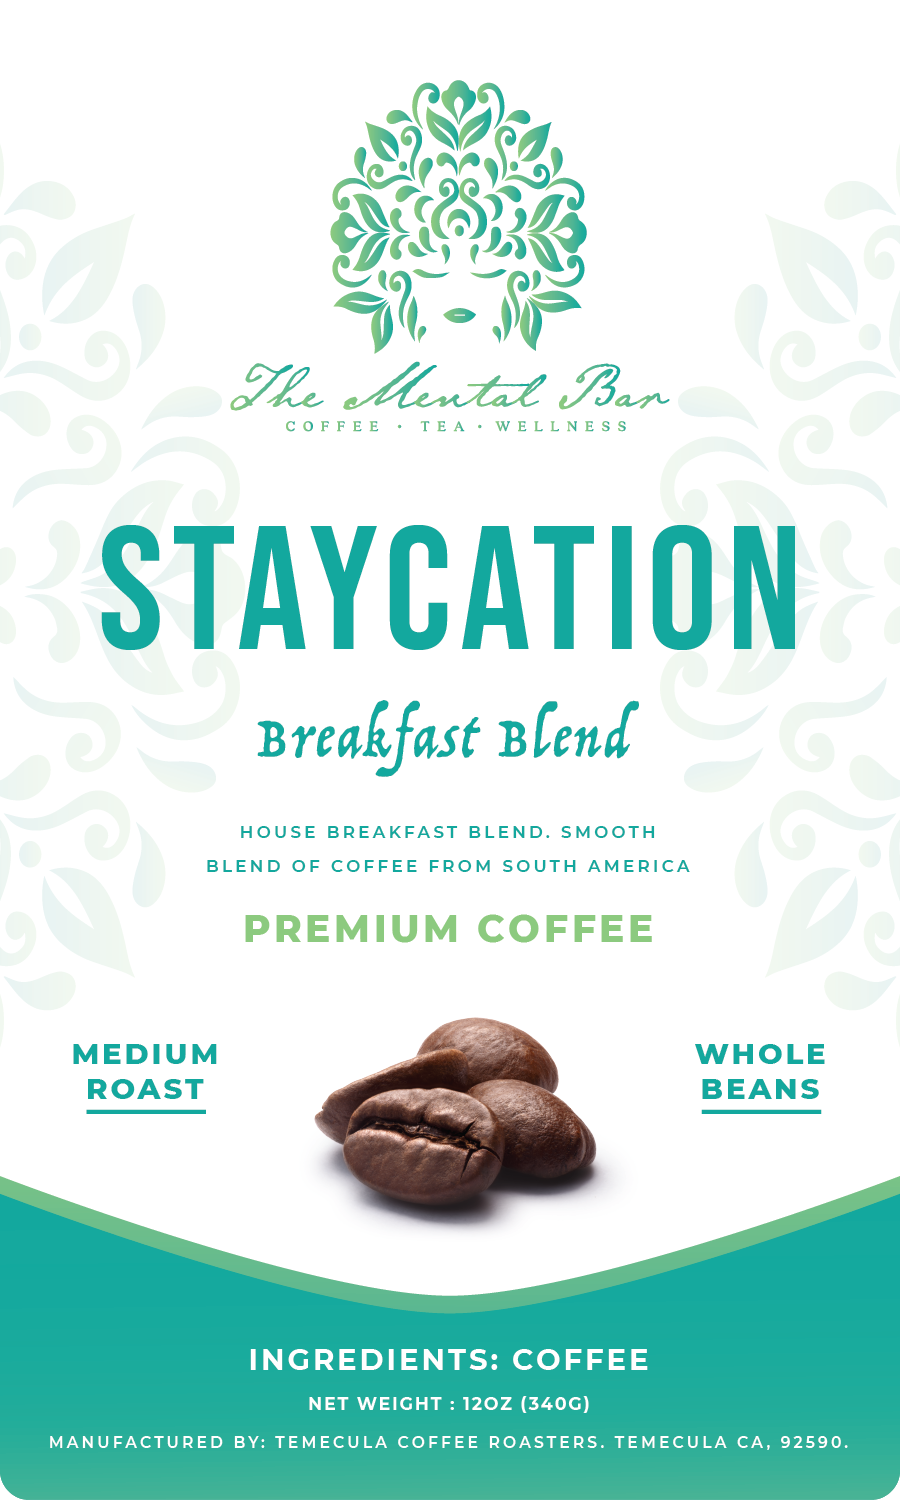 Staycation (Breakfast Blend) - The Mental Bar